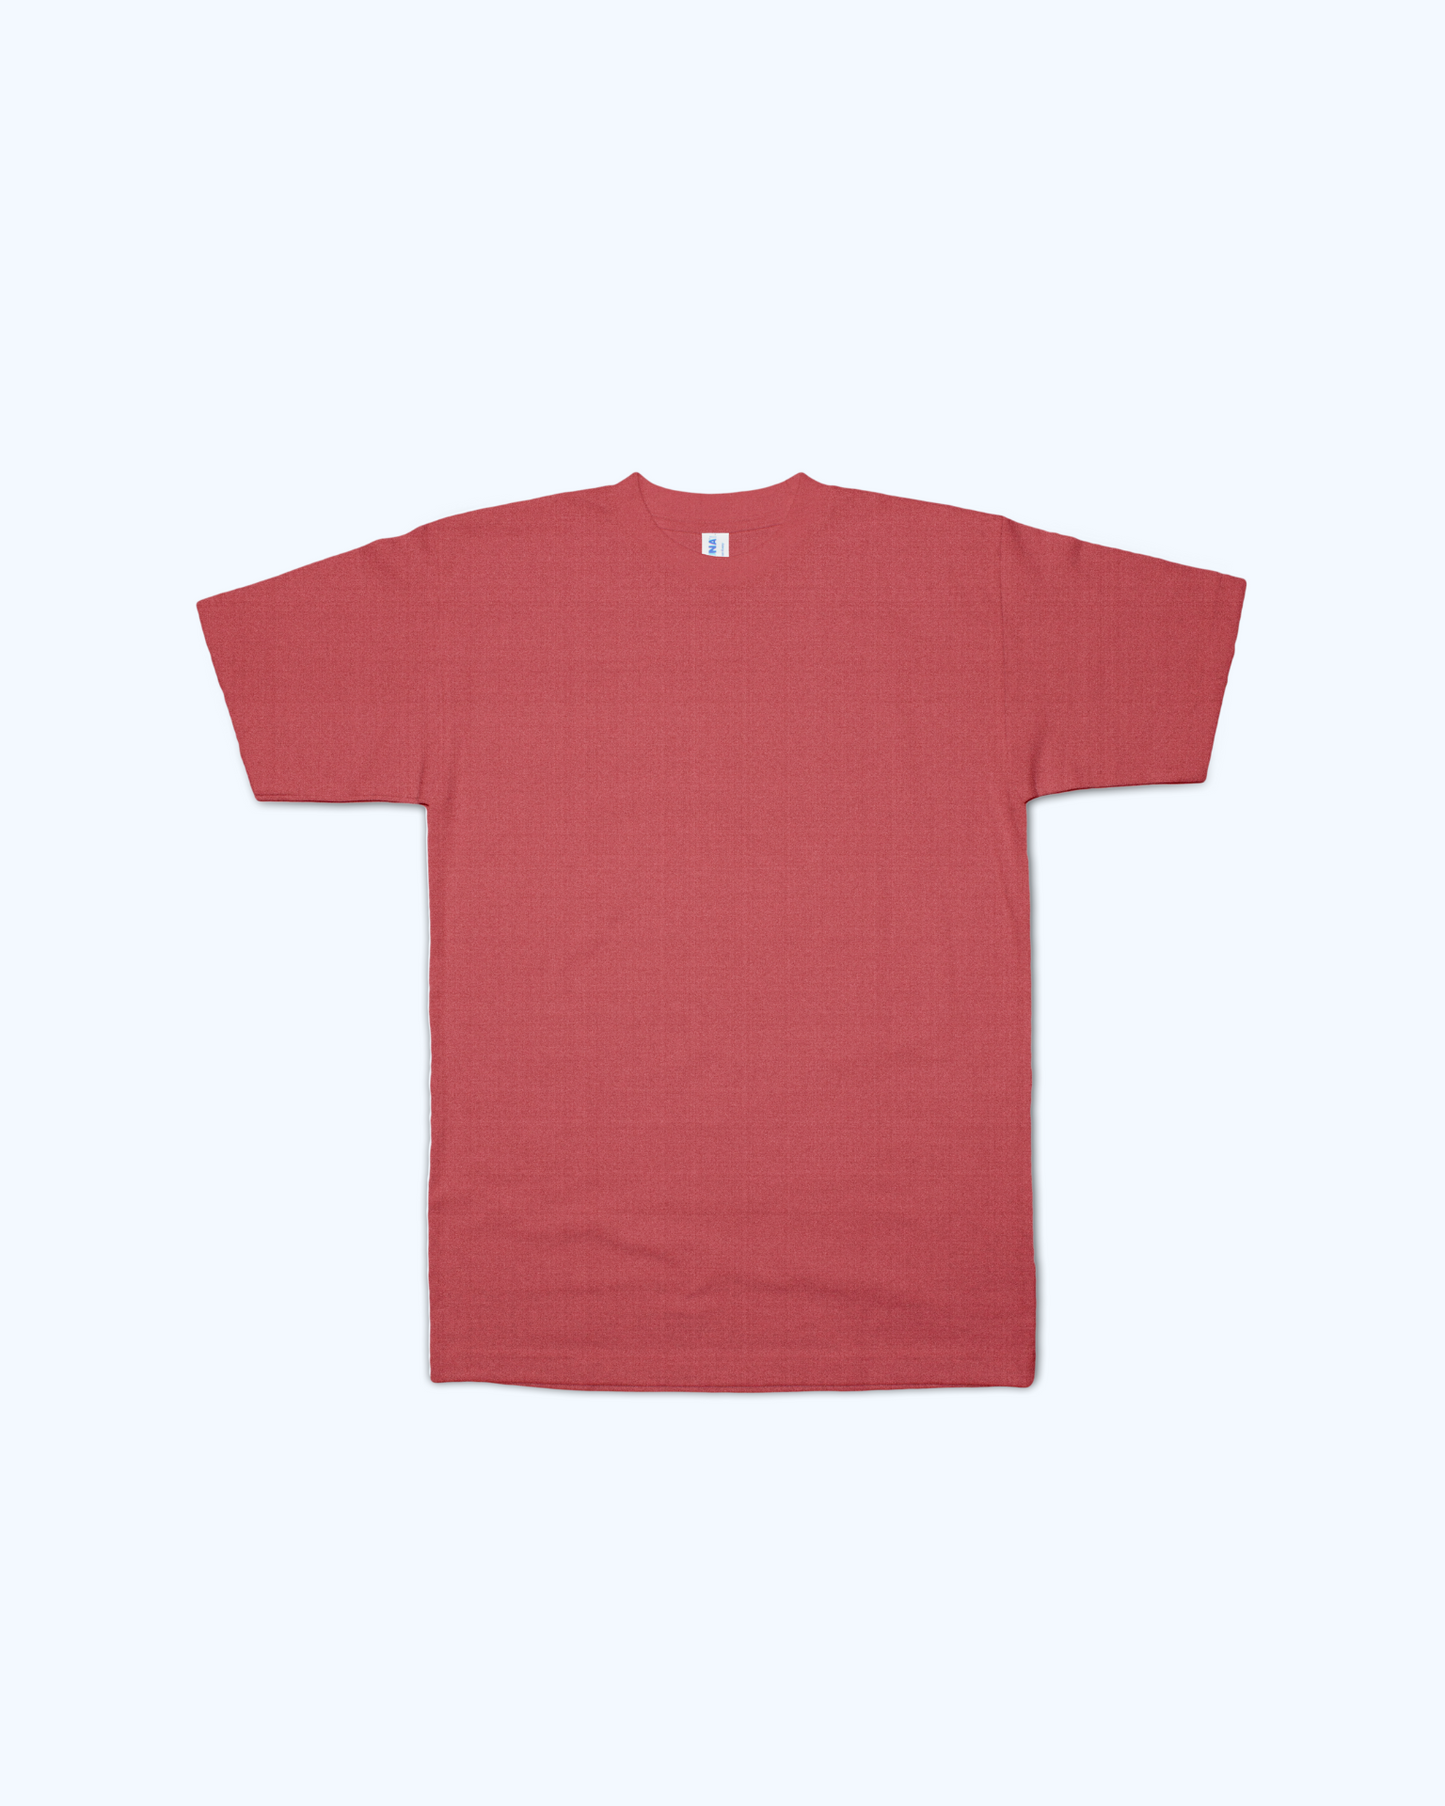 Suna Cotton® Adult T-shirt - 320